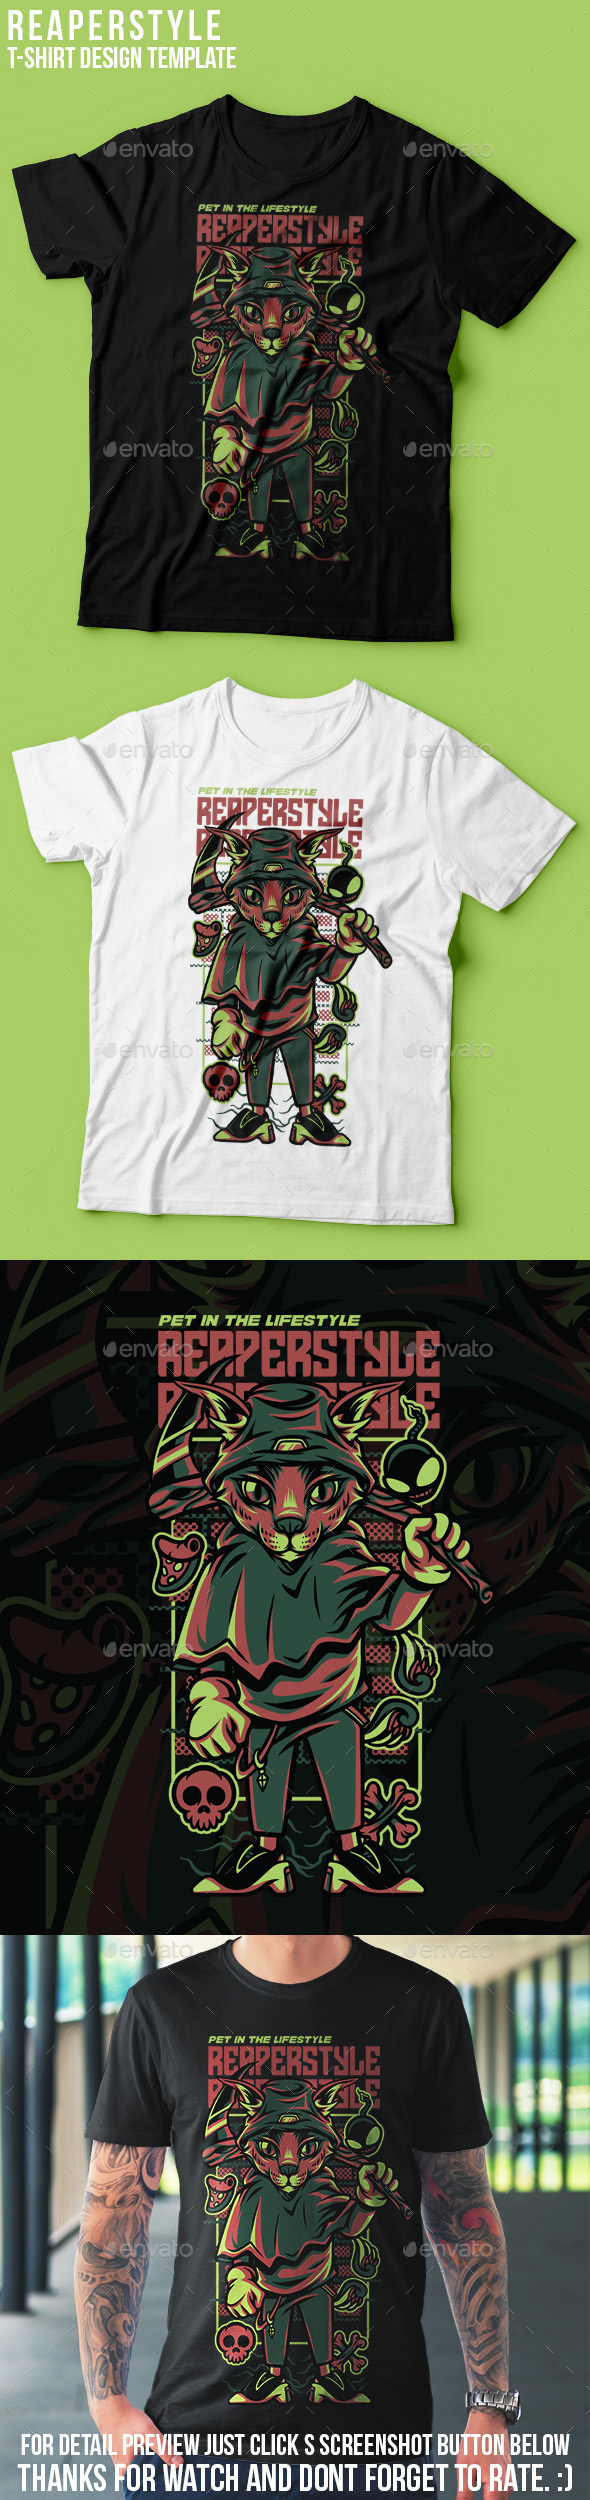 Reaper Style T-Shirt Design